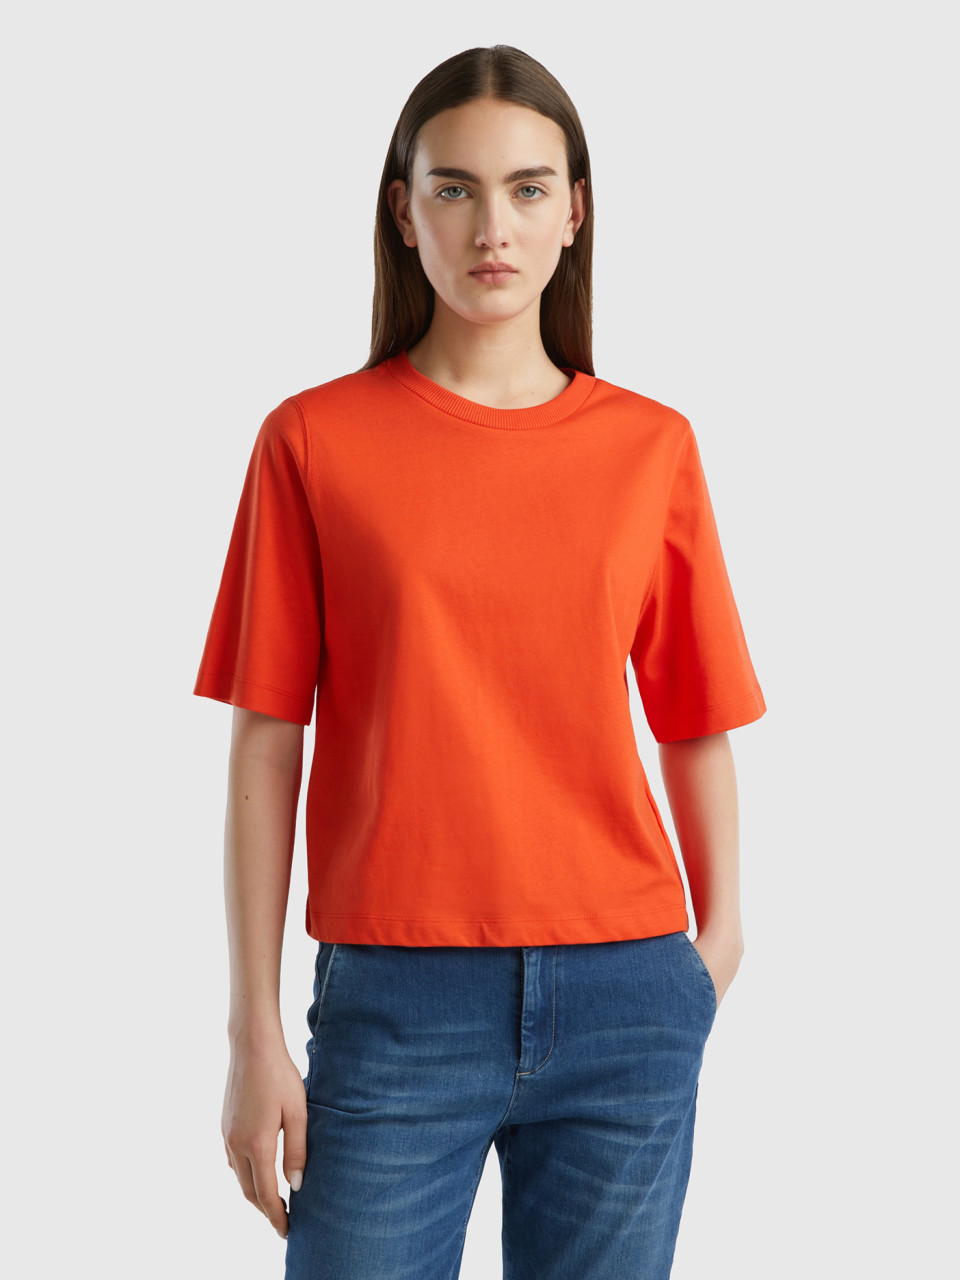 Benetton, 100% Cotton Boxy Fit T-shirt, Red, Women